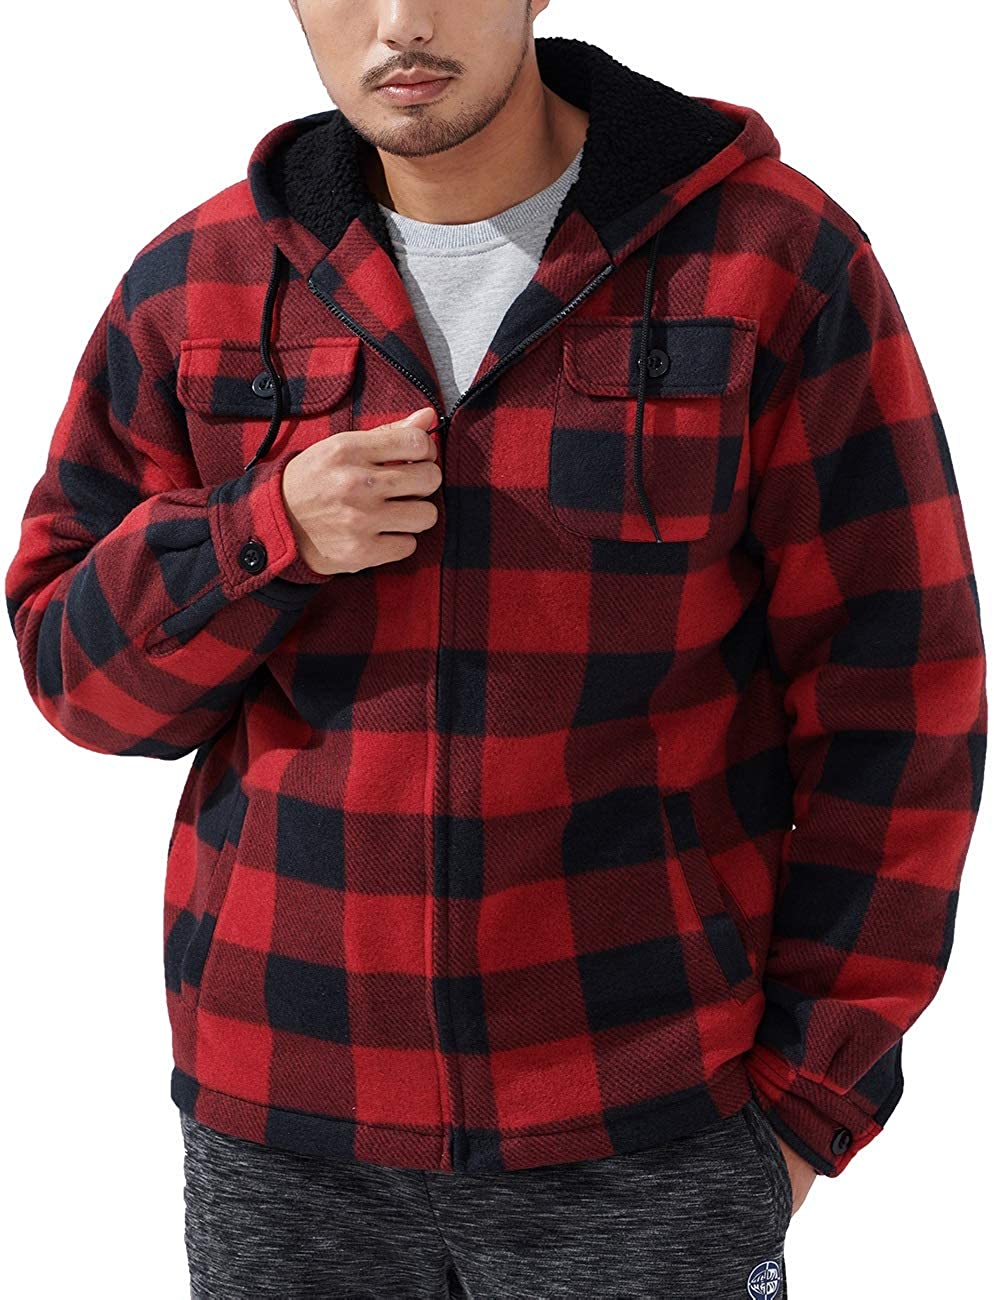 Land's End Men's Flannel Lined Long Sleeve Work Shirt Jacket | eBay-hangkhonggiare.com.vn